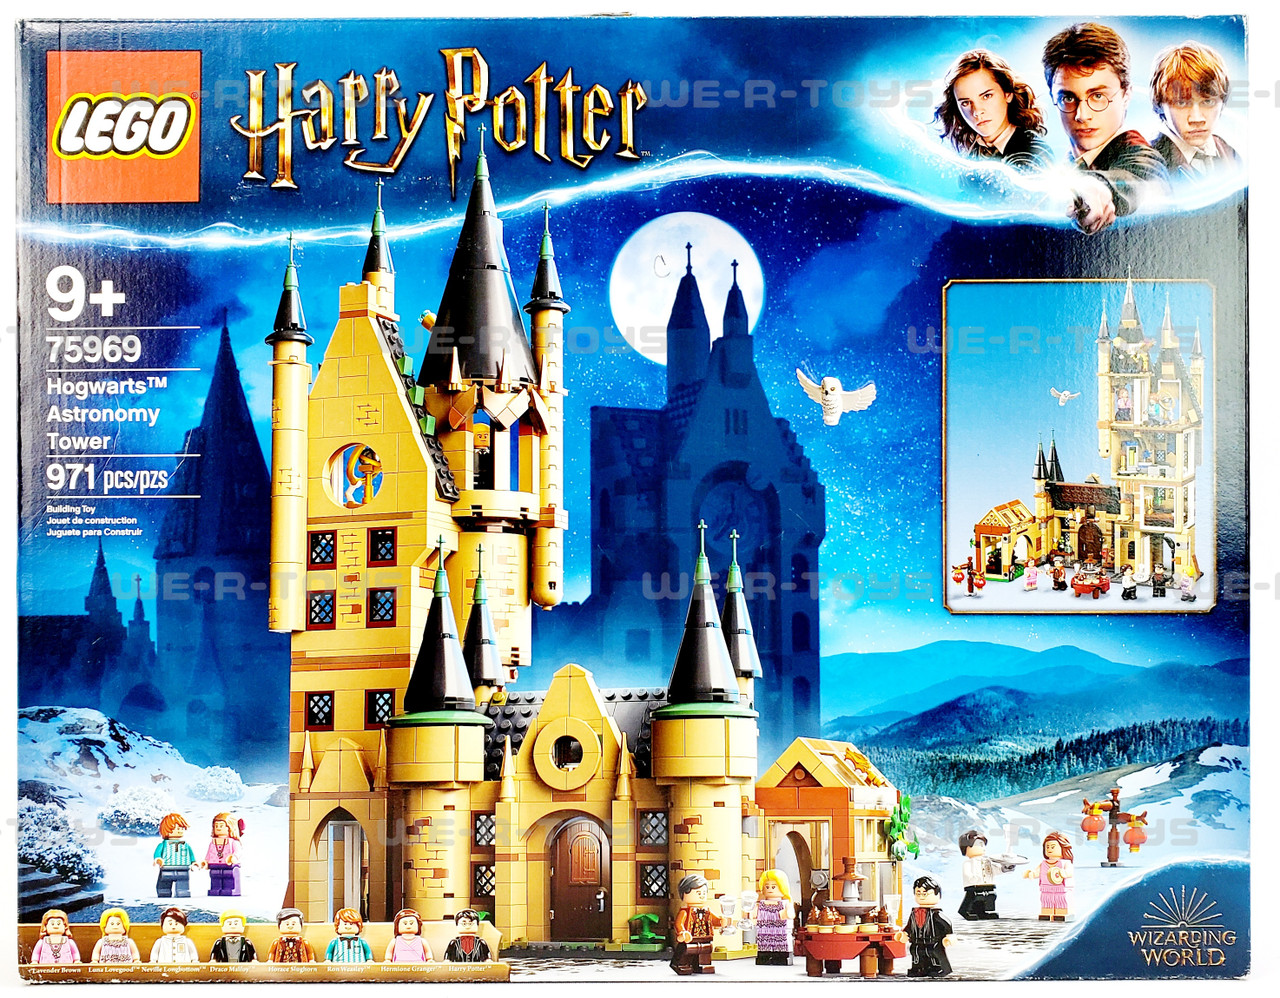 Lego 75969 - Harry Potter Hogwarts Astronomy Tower